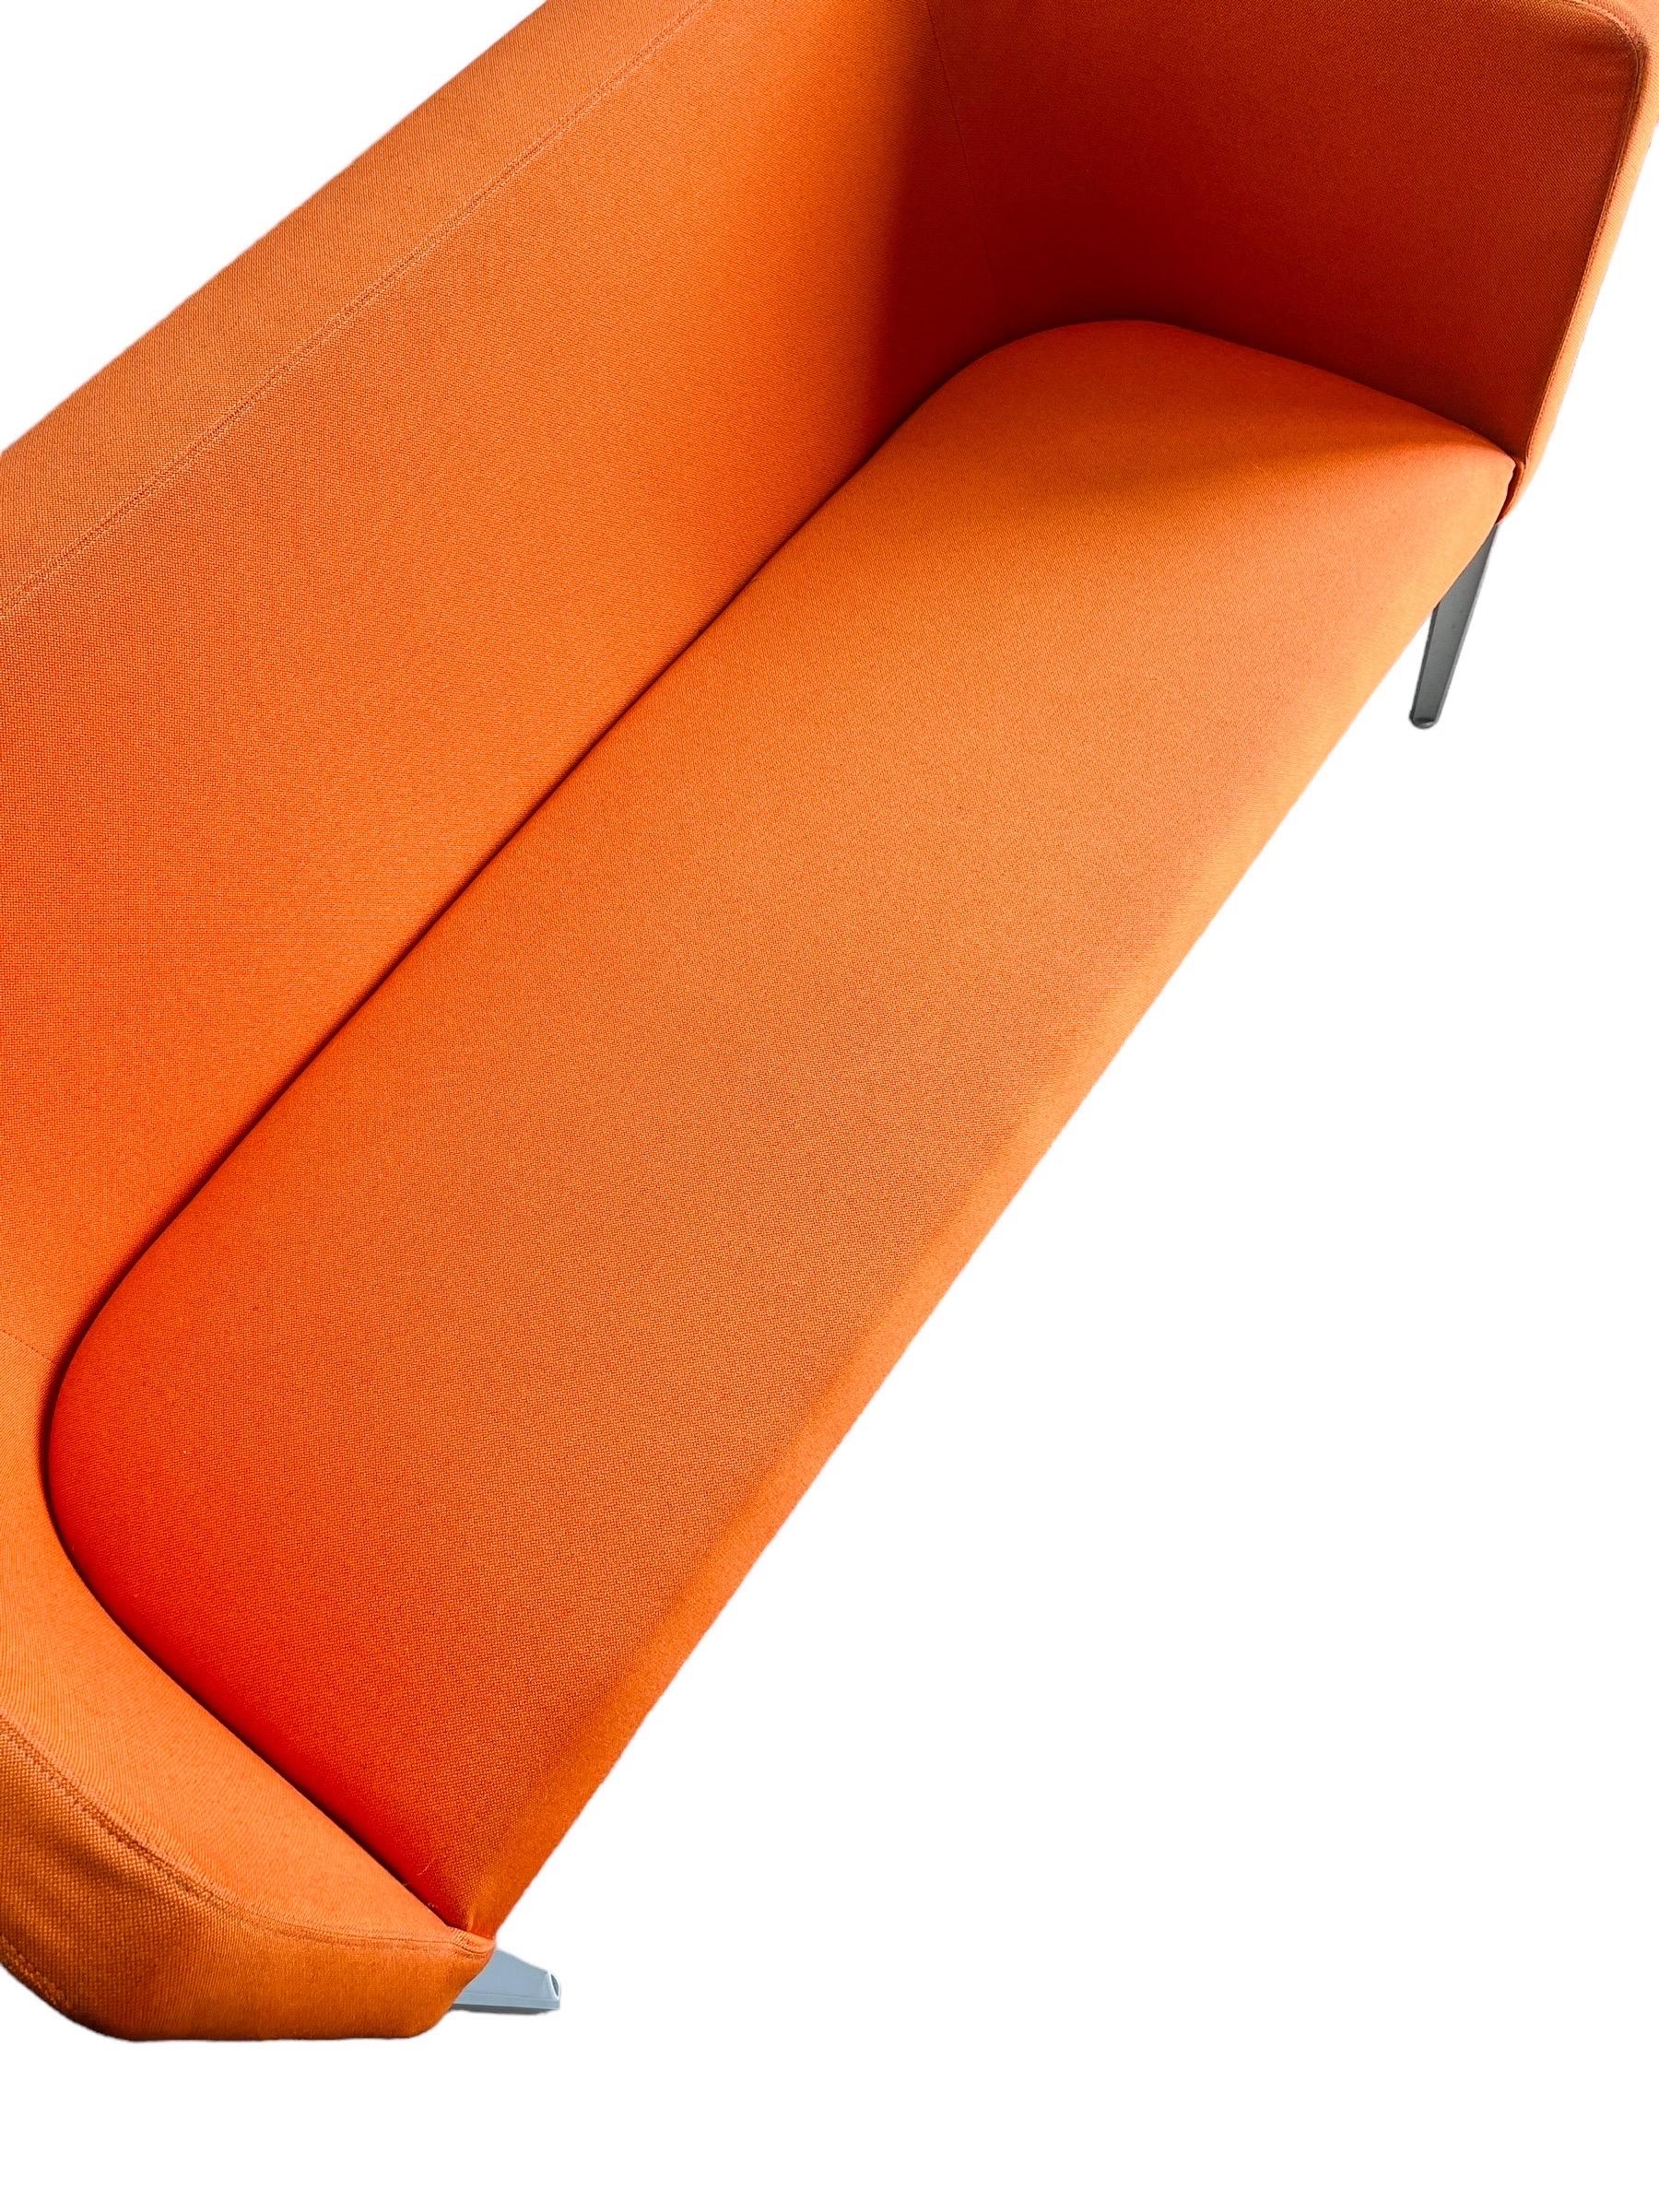 Steelcase Bivi Rumble Seat Collection: Vibrant Orange Modern Sofa 3